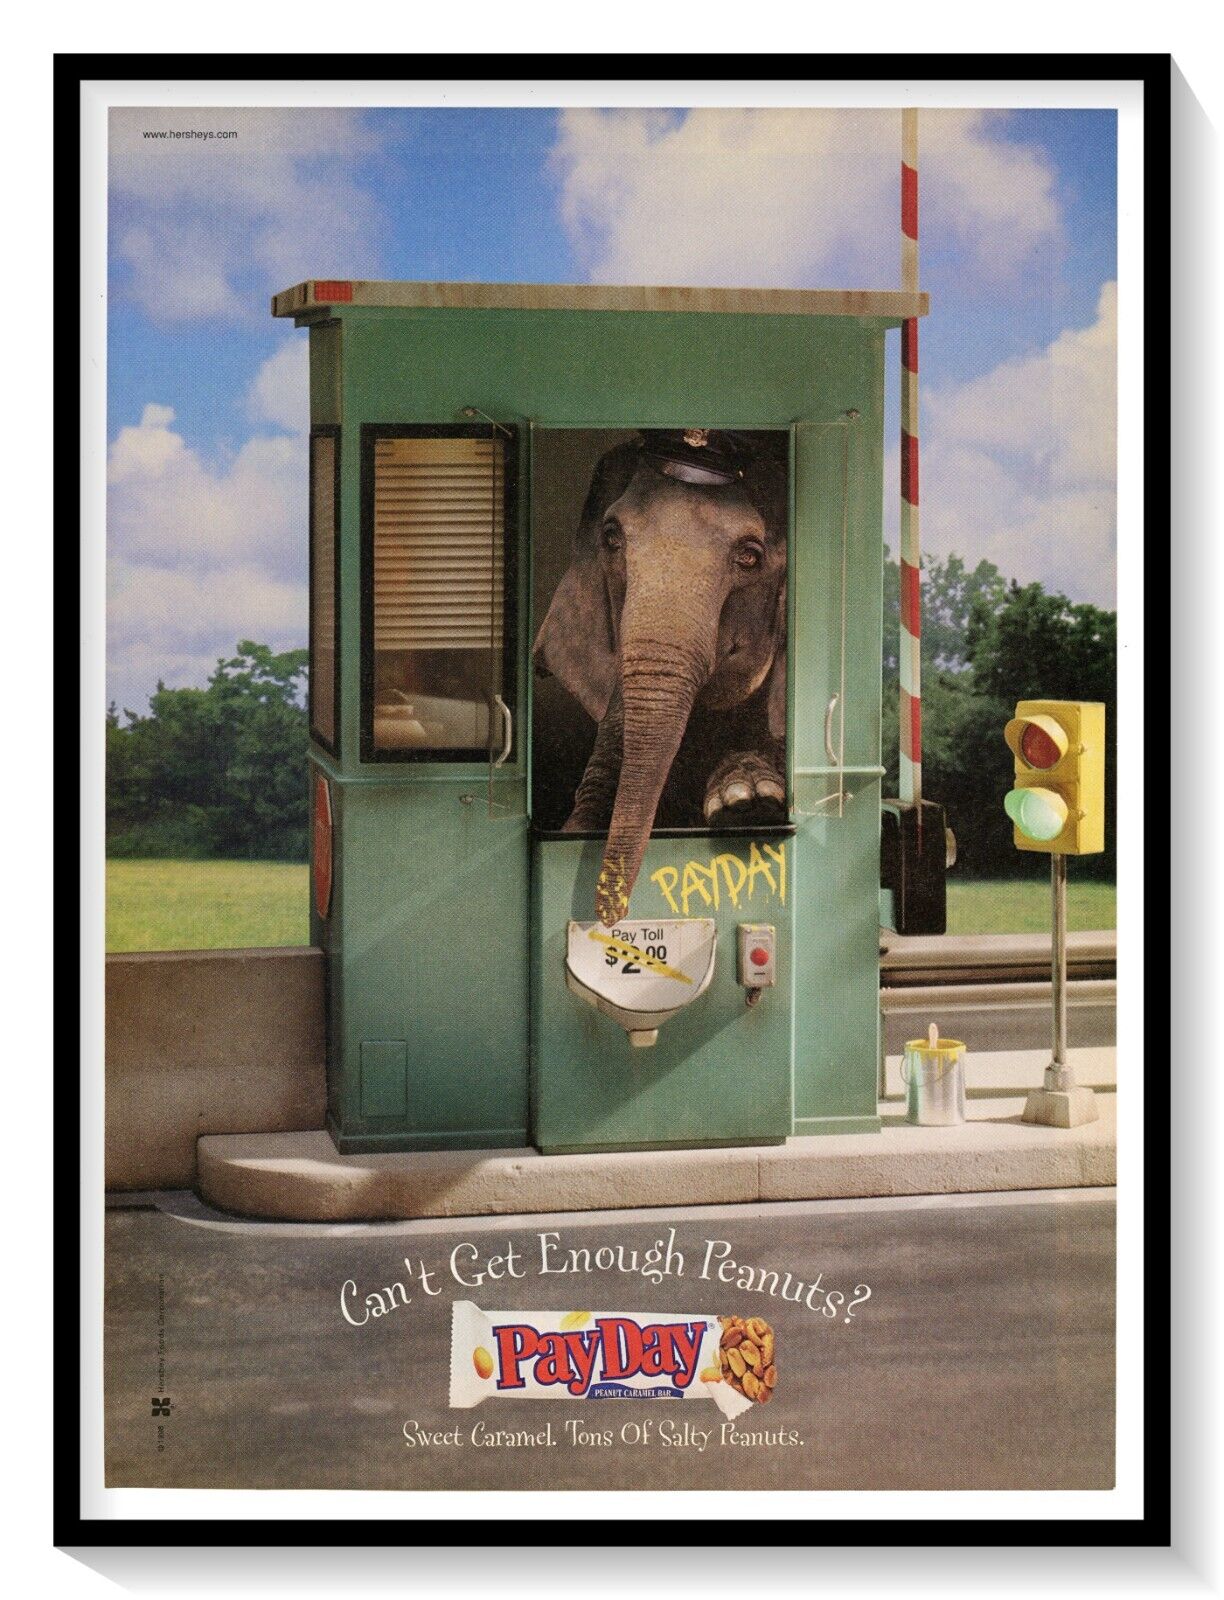 PayDay Candy Bar Elephant Print Ad Vintage 2000 Magazine Advertisement Hershey\'s